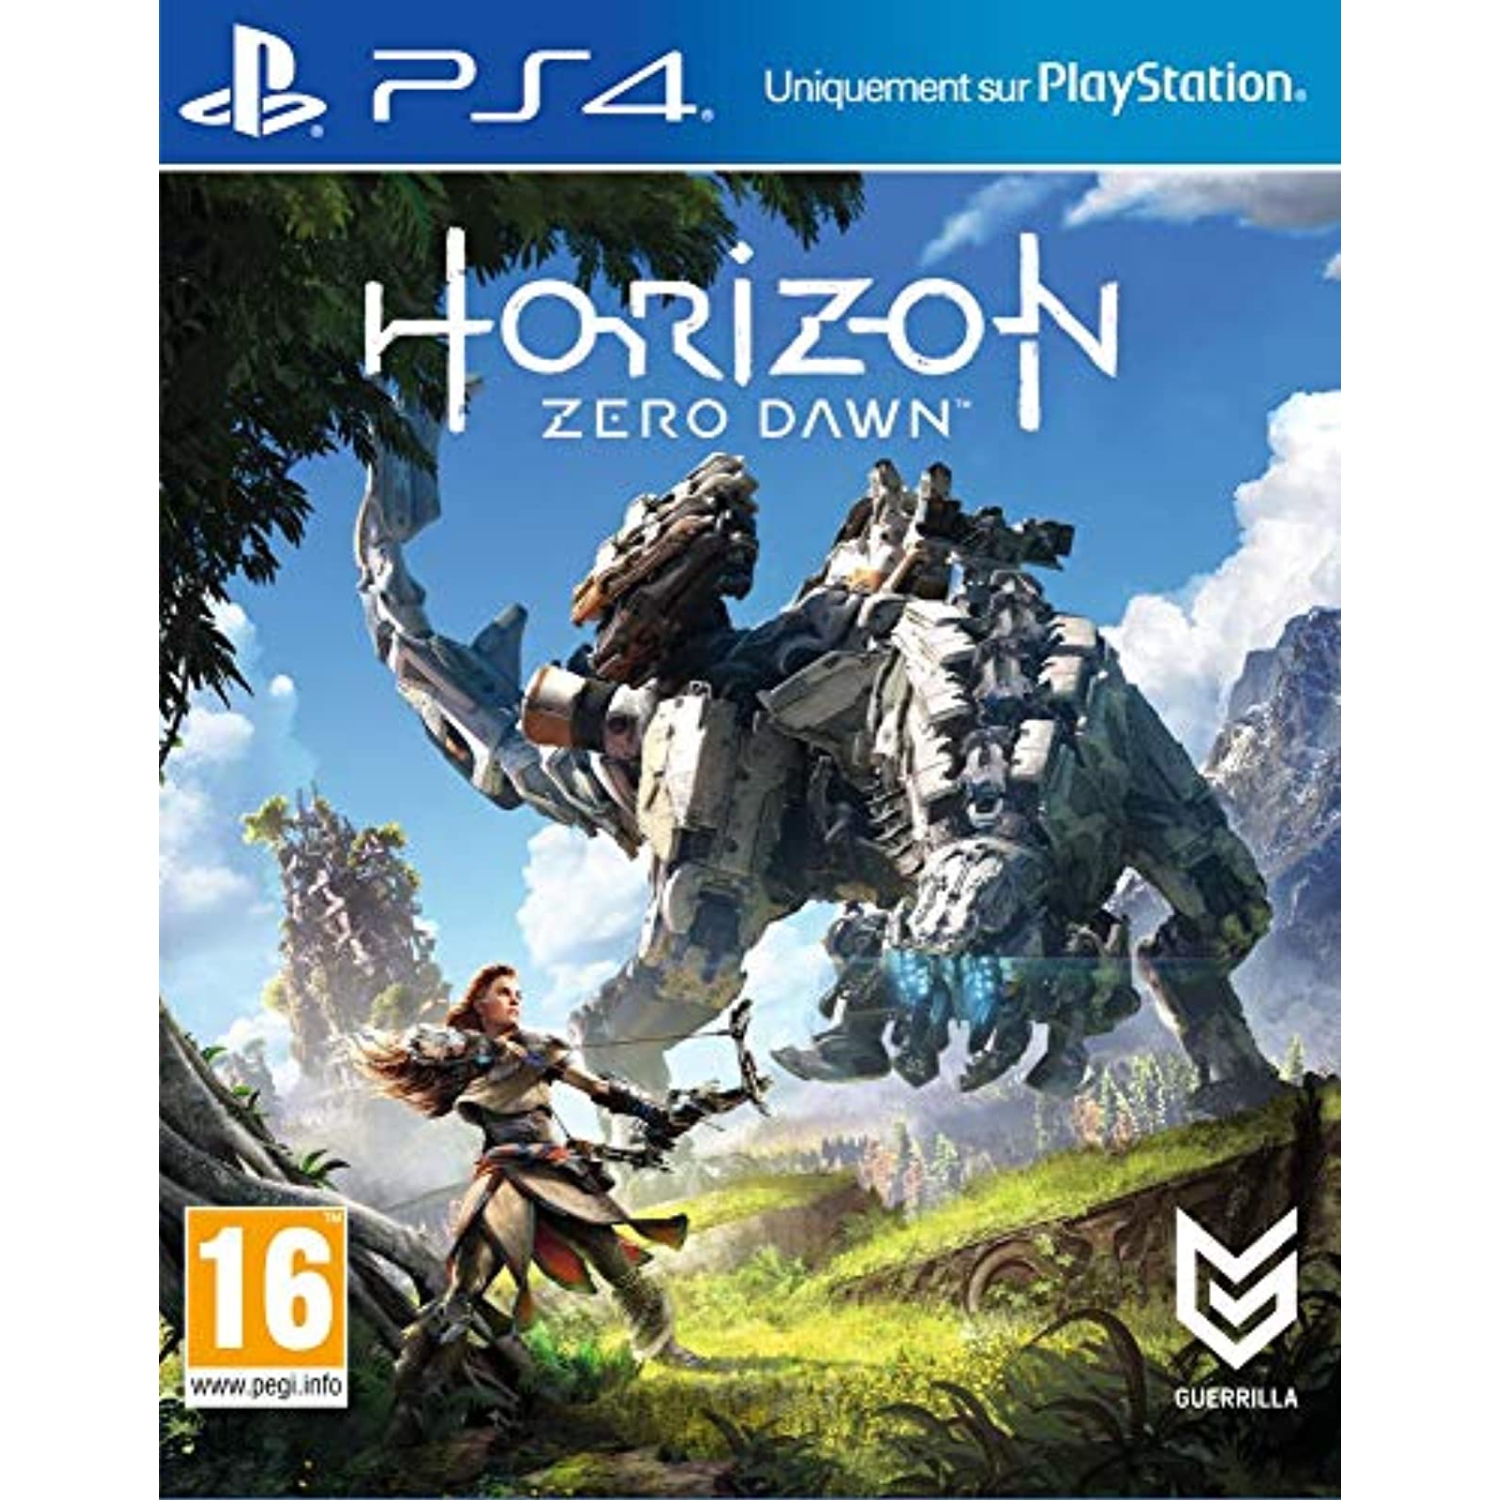 Previously Played - Horizon Zero Dawn For PlayStation 4 PS4 Shooter